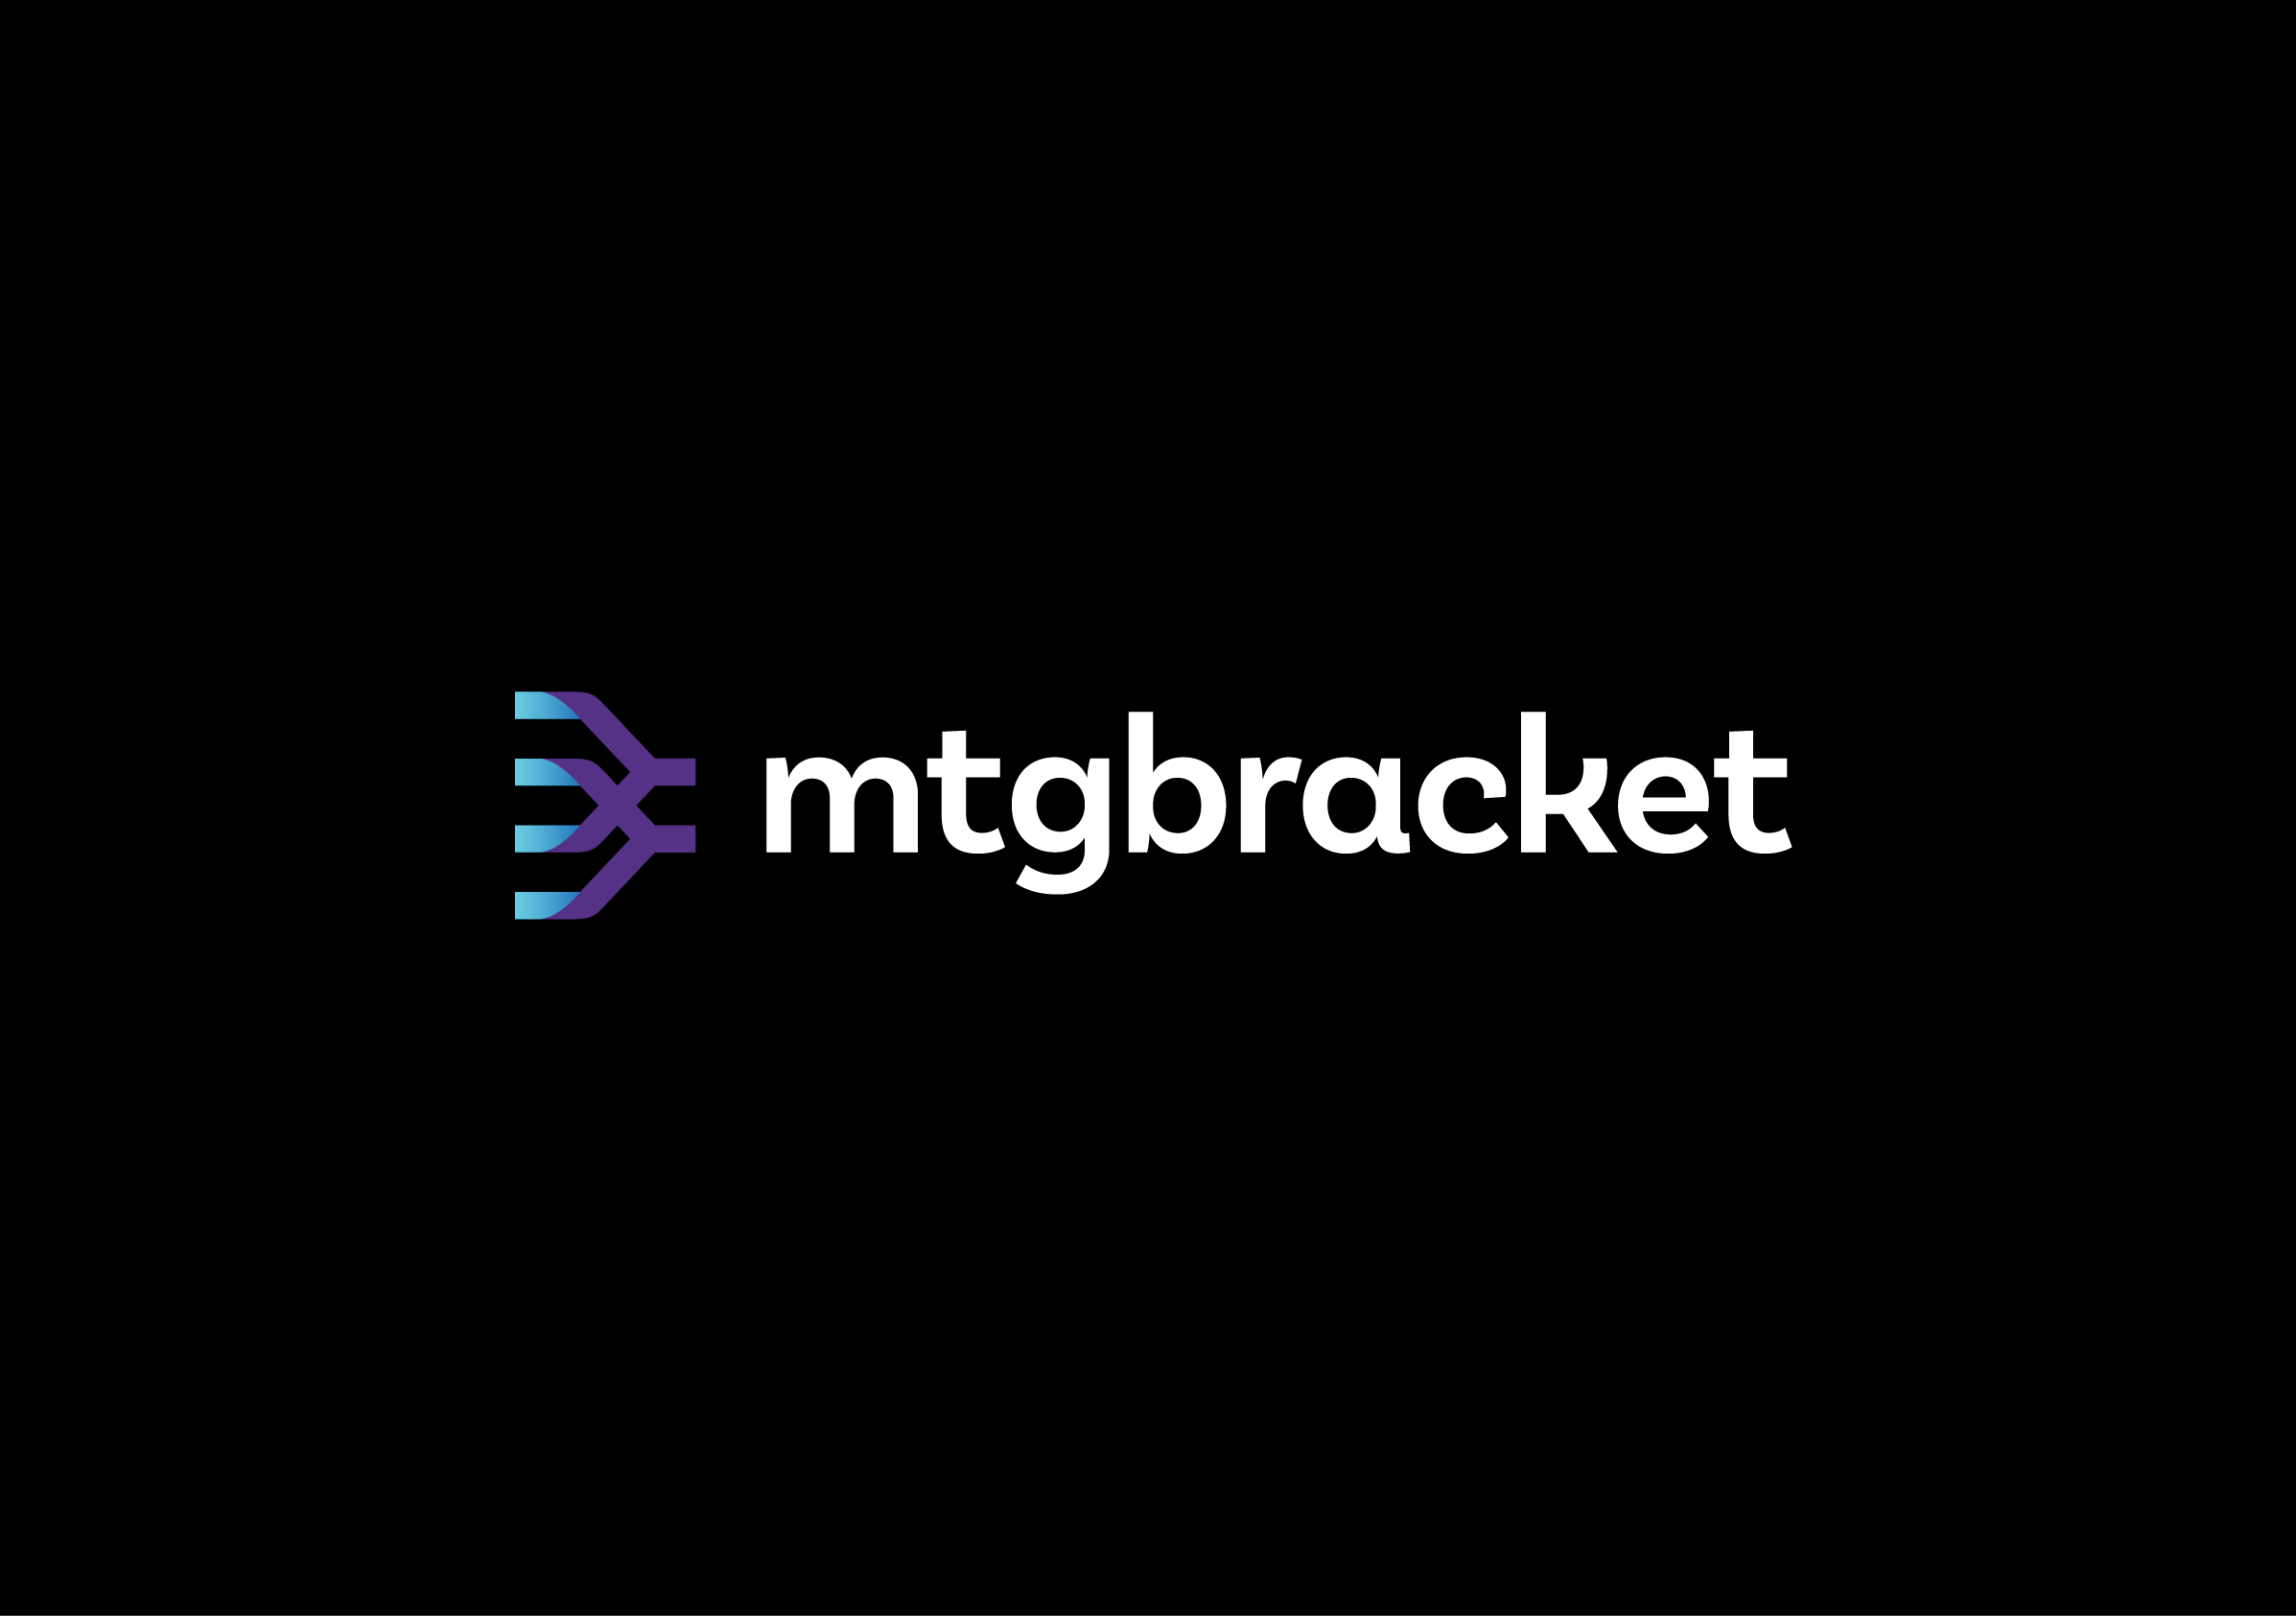 mtgbracket software logo design reversed  by idApostle